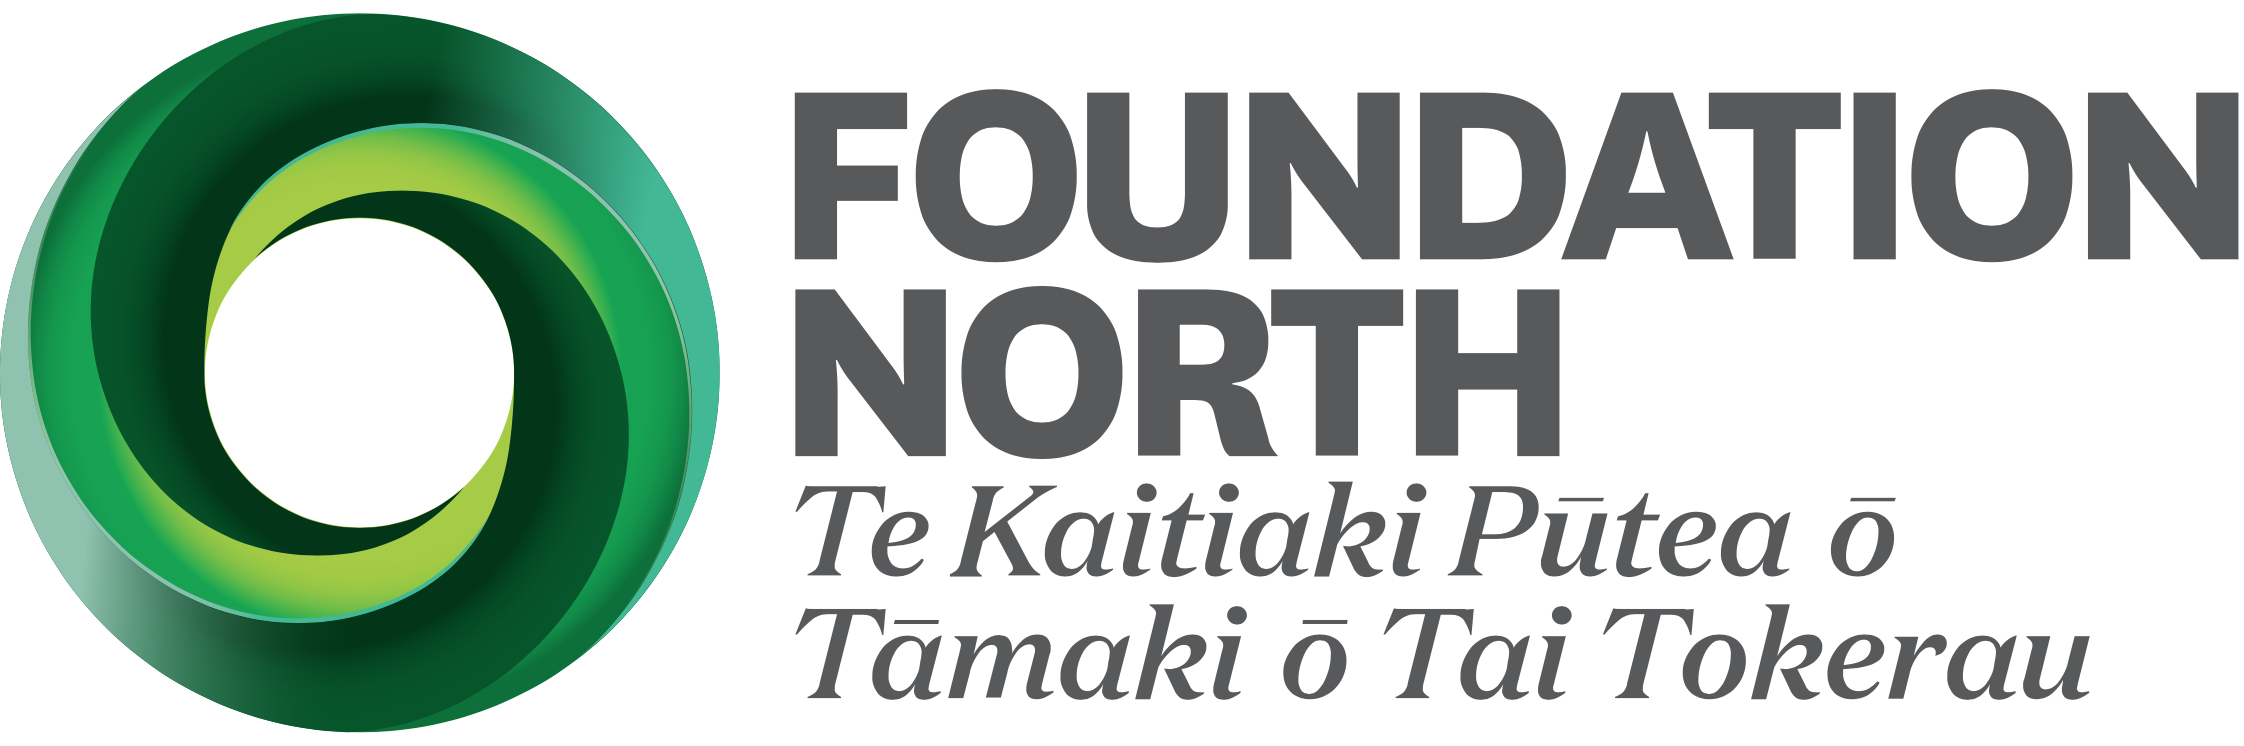 Foundation-North-logo.png